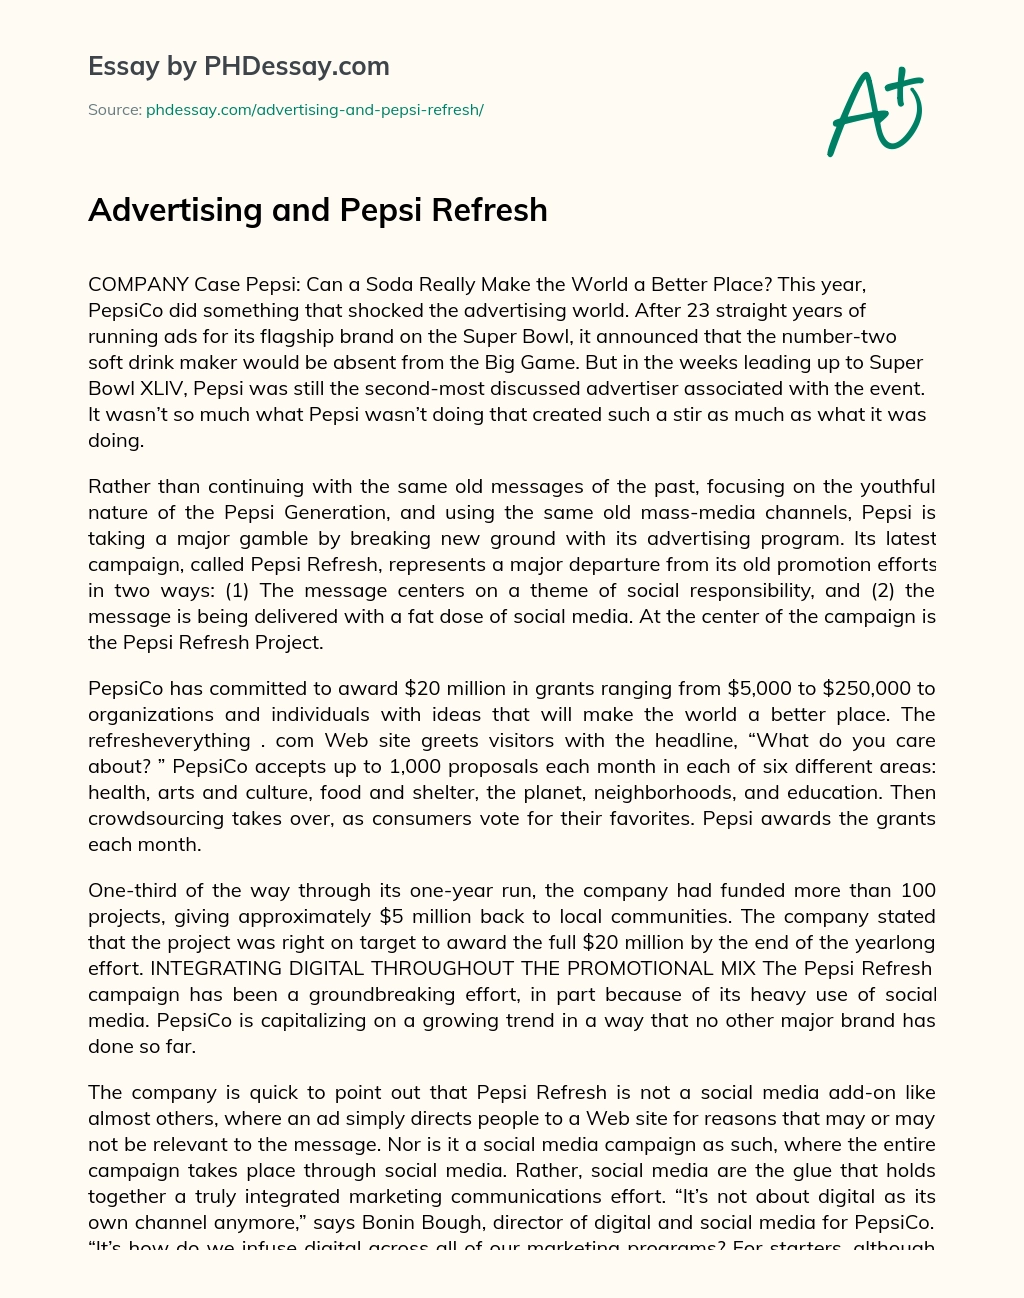 Advertising and Pepsi Refresh essay